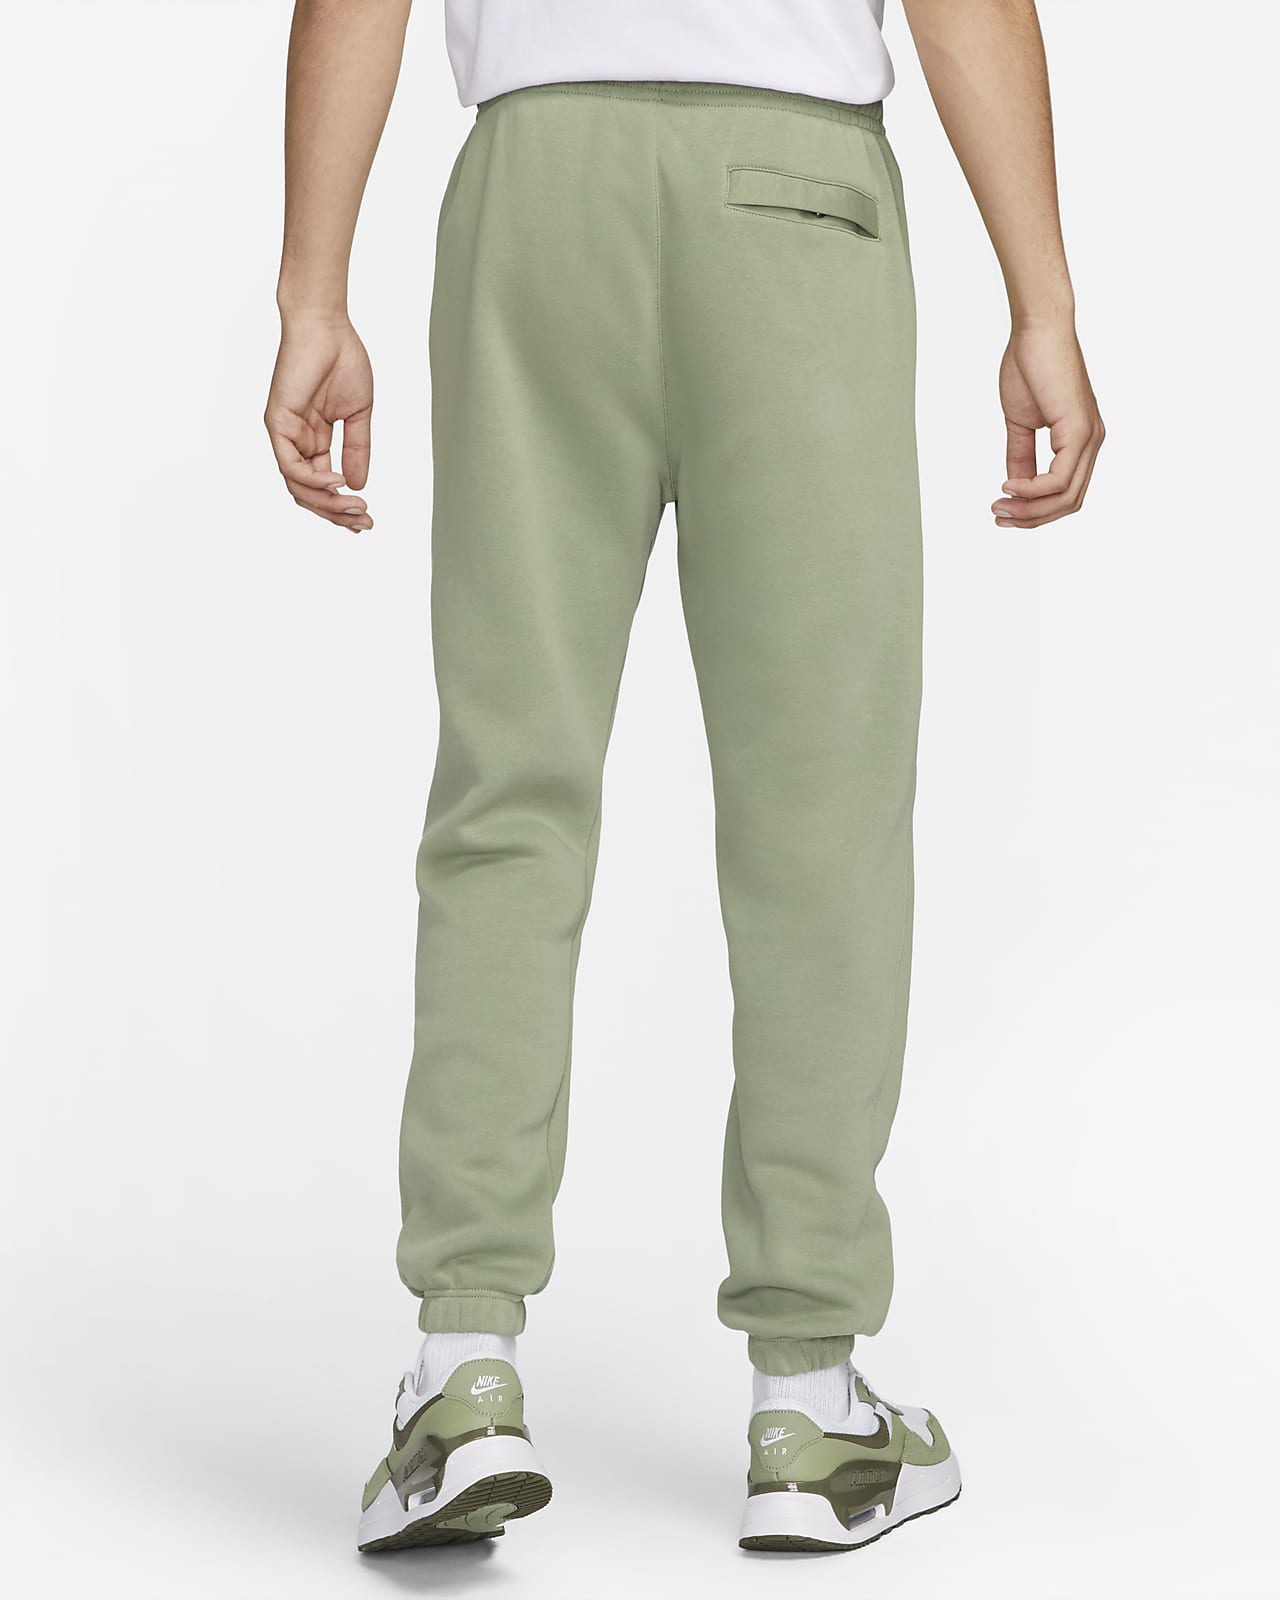 Skyldig Tegne forsikring hval Nike Sportswear Club Fleece Men's Pants. Nike.com